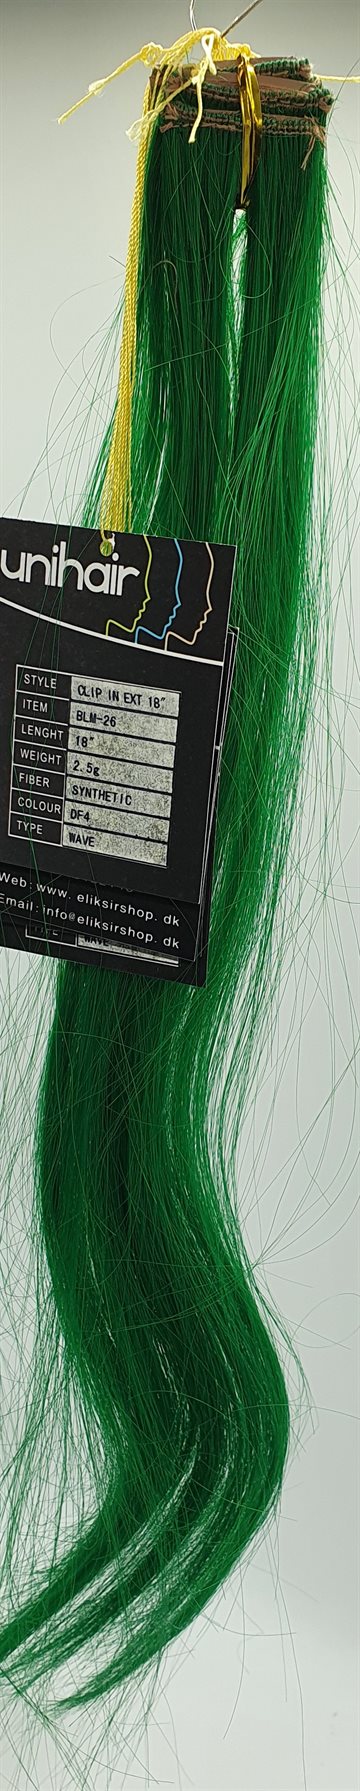 Klip hår item BL-26 Farve DF4 grøn -18". 10 klip hår i en pak.